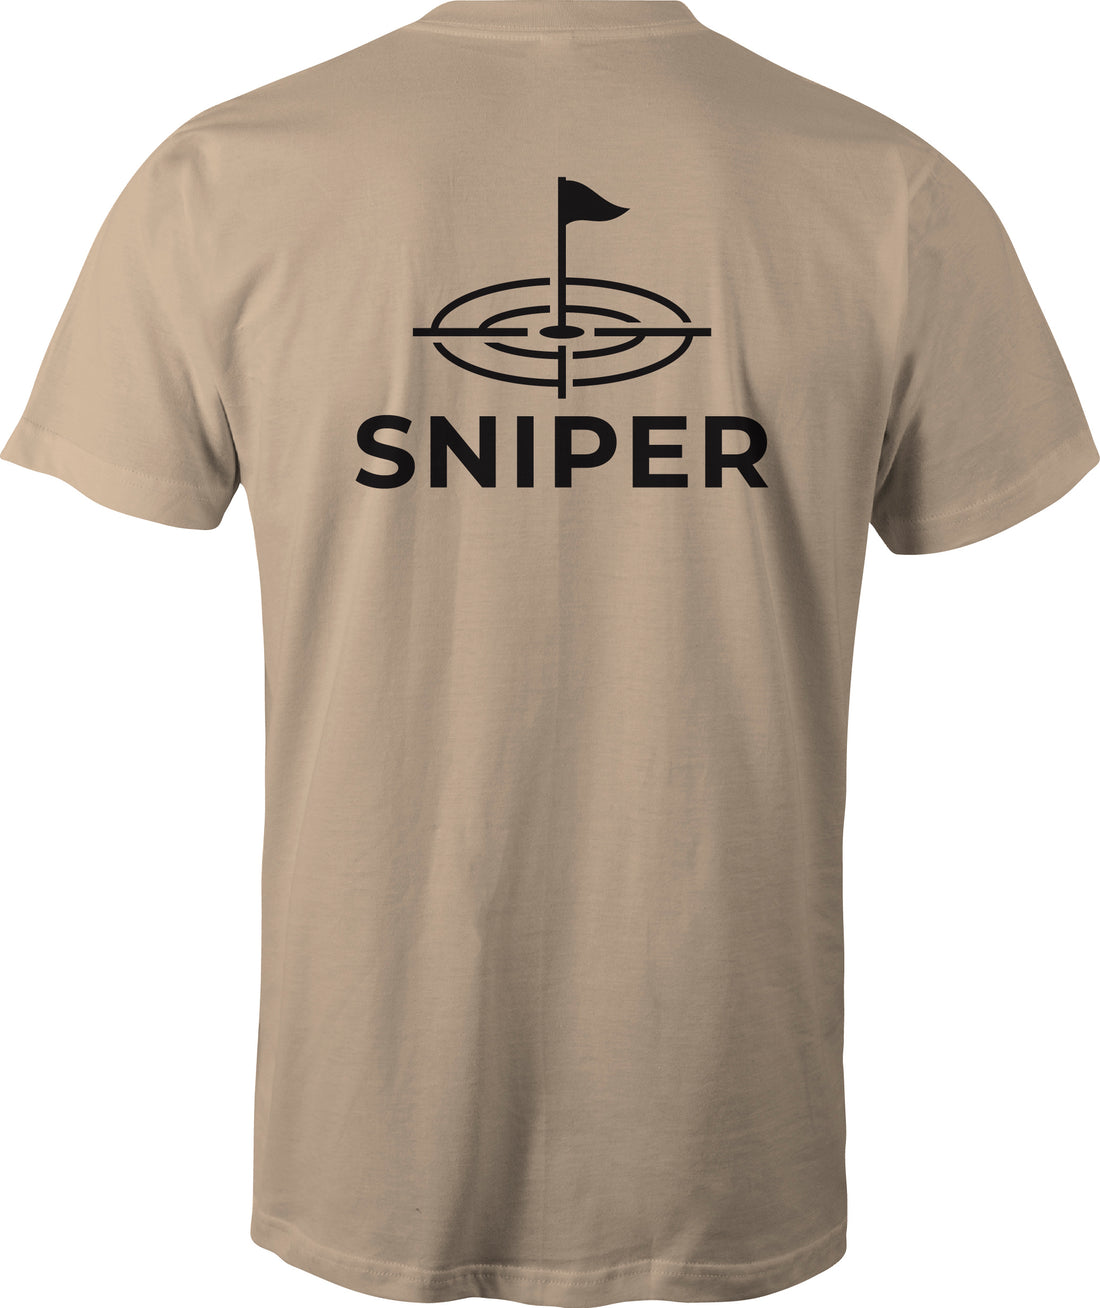 Golf Is Hard Sniper